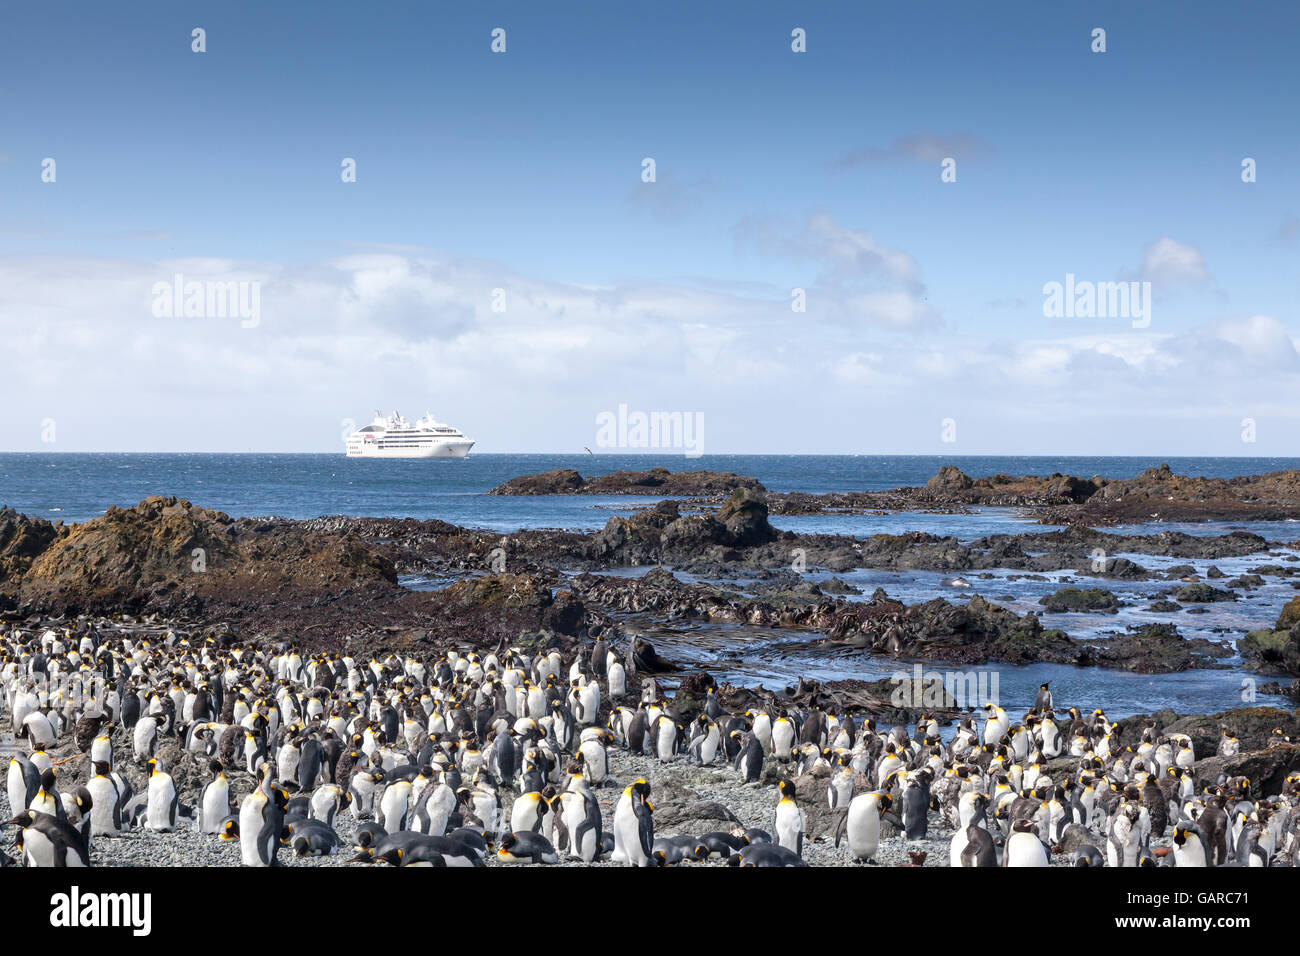 King penguins at Macquarie Island, Australian Subantarctic Stock Photo